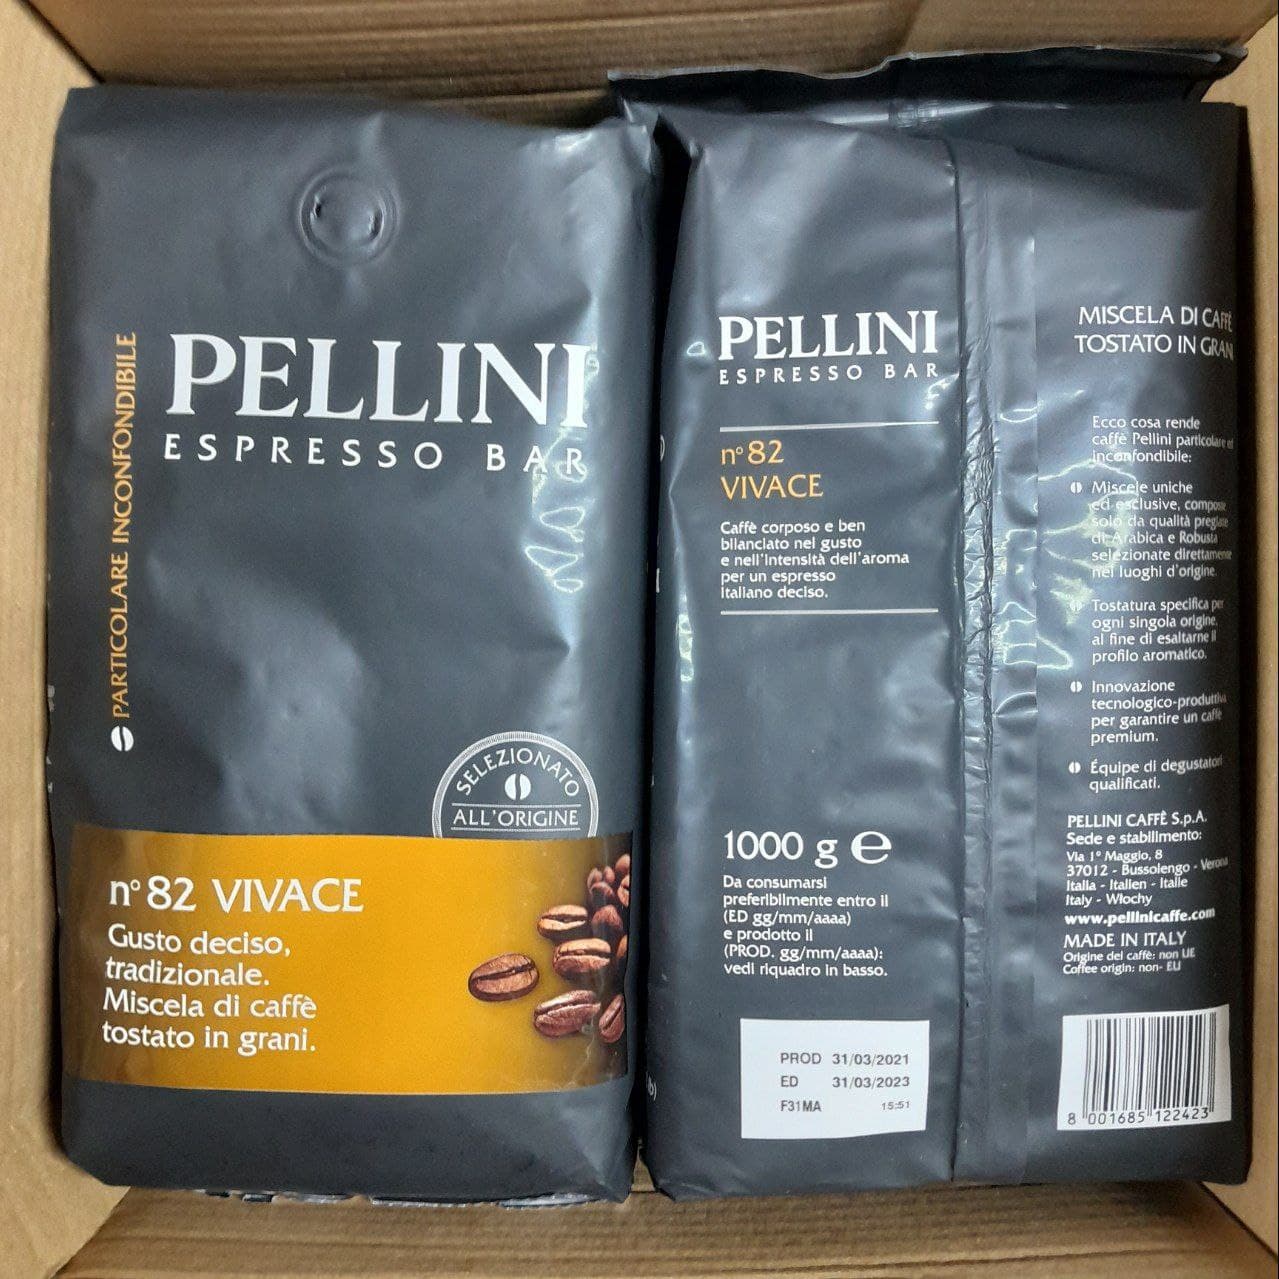 Kohvioad "PELLINI" Espresso Bar Vivace